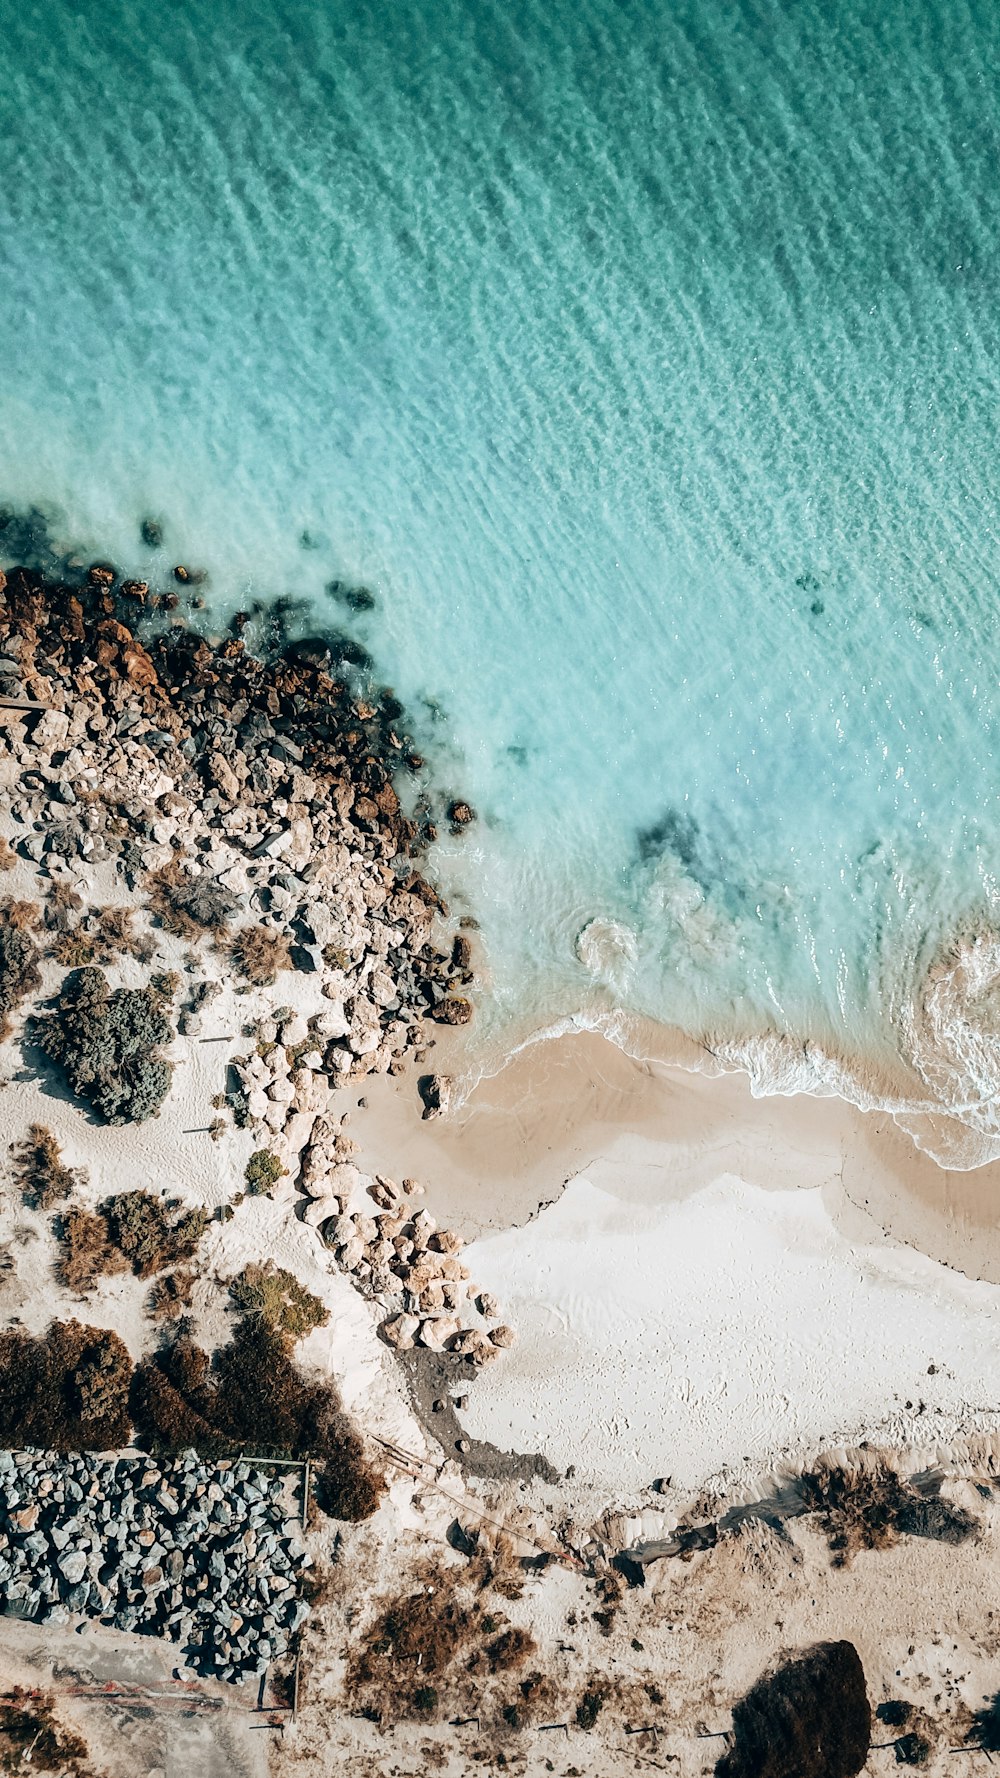 an aerial view of a sandy beach and the ocean